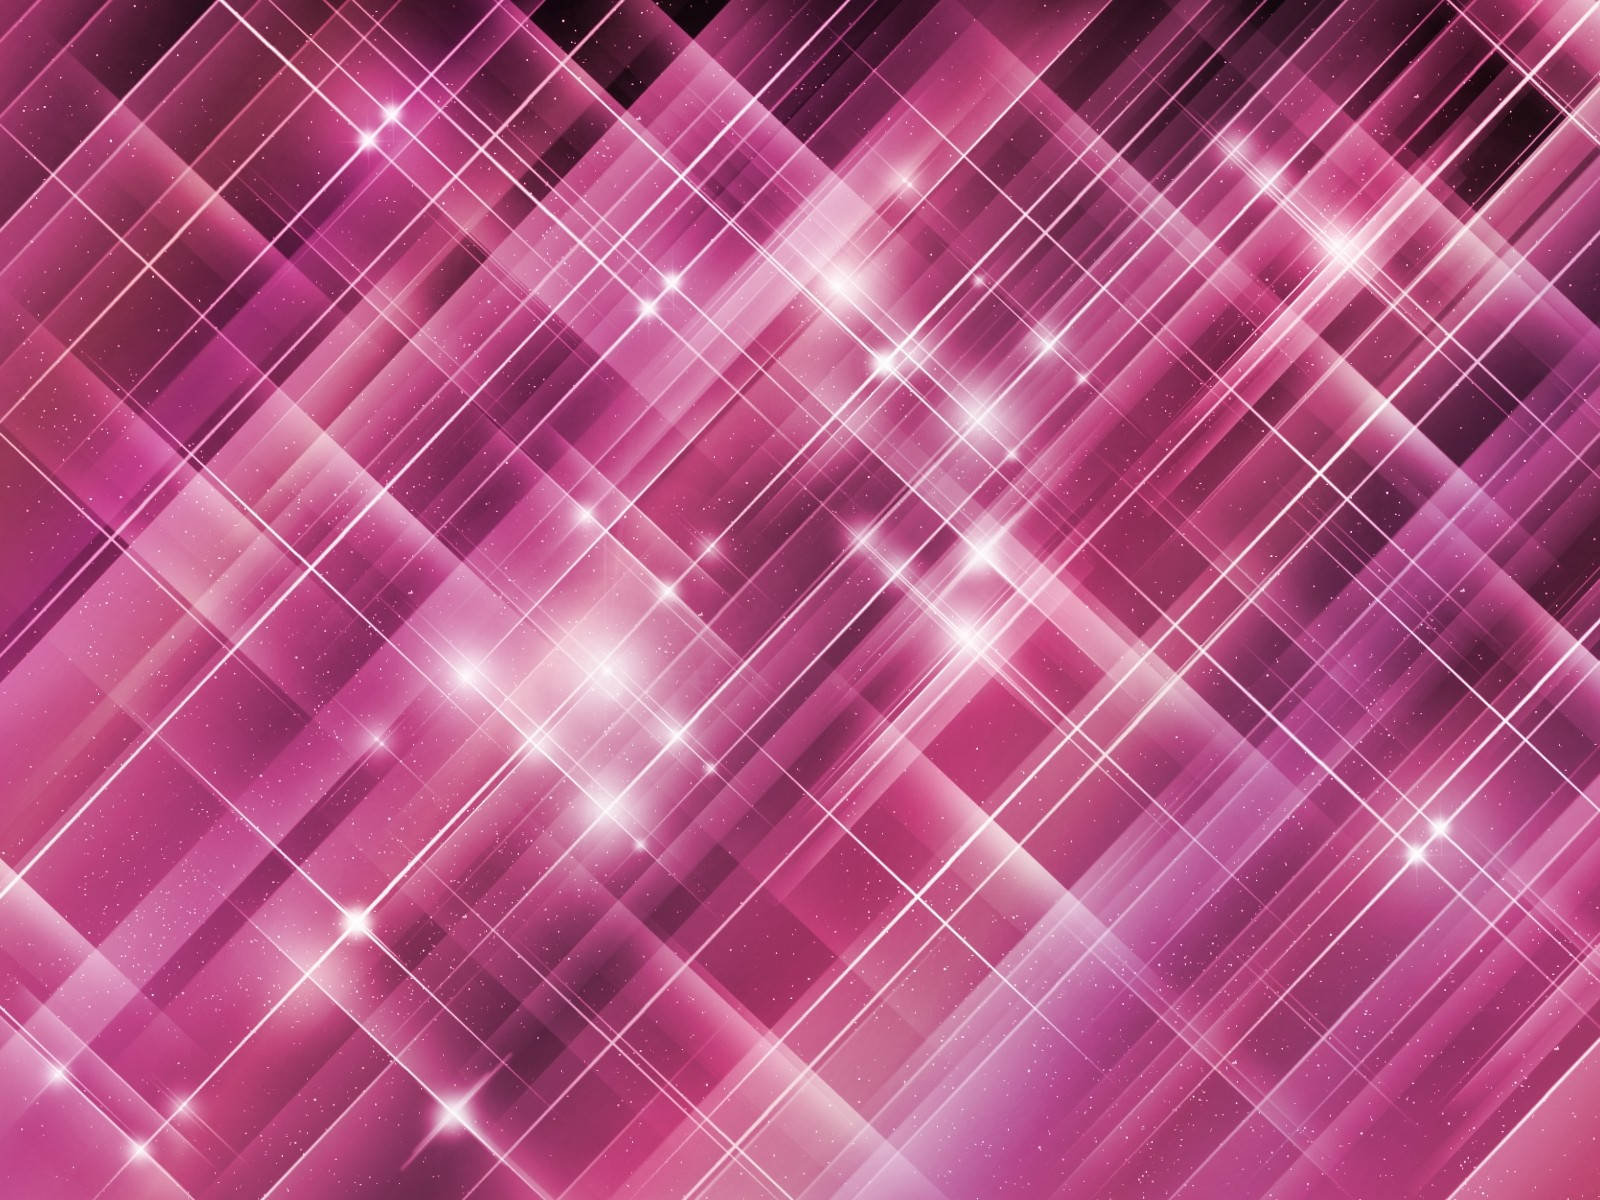 Blurry Pink Sparkled Lights Background